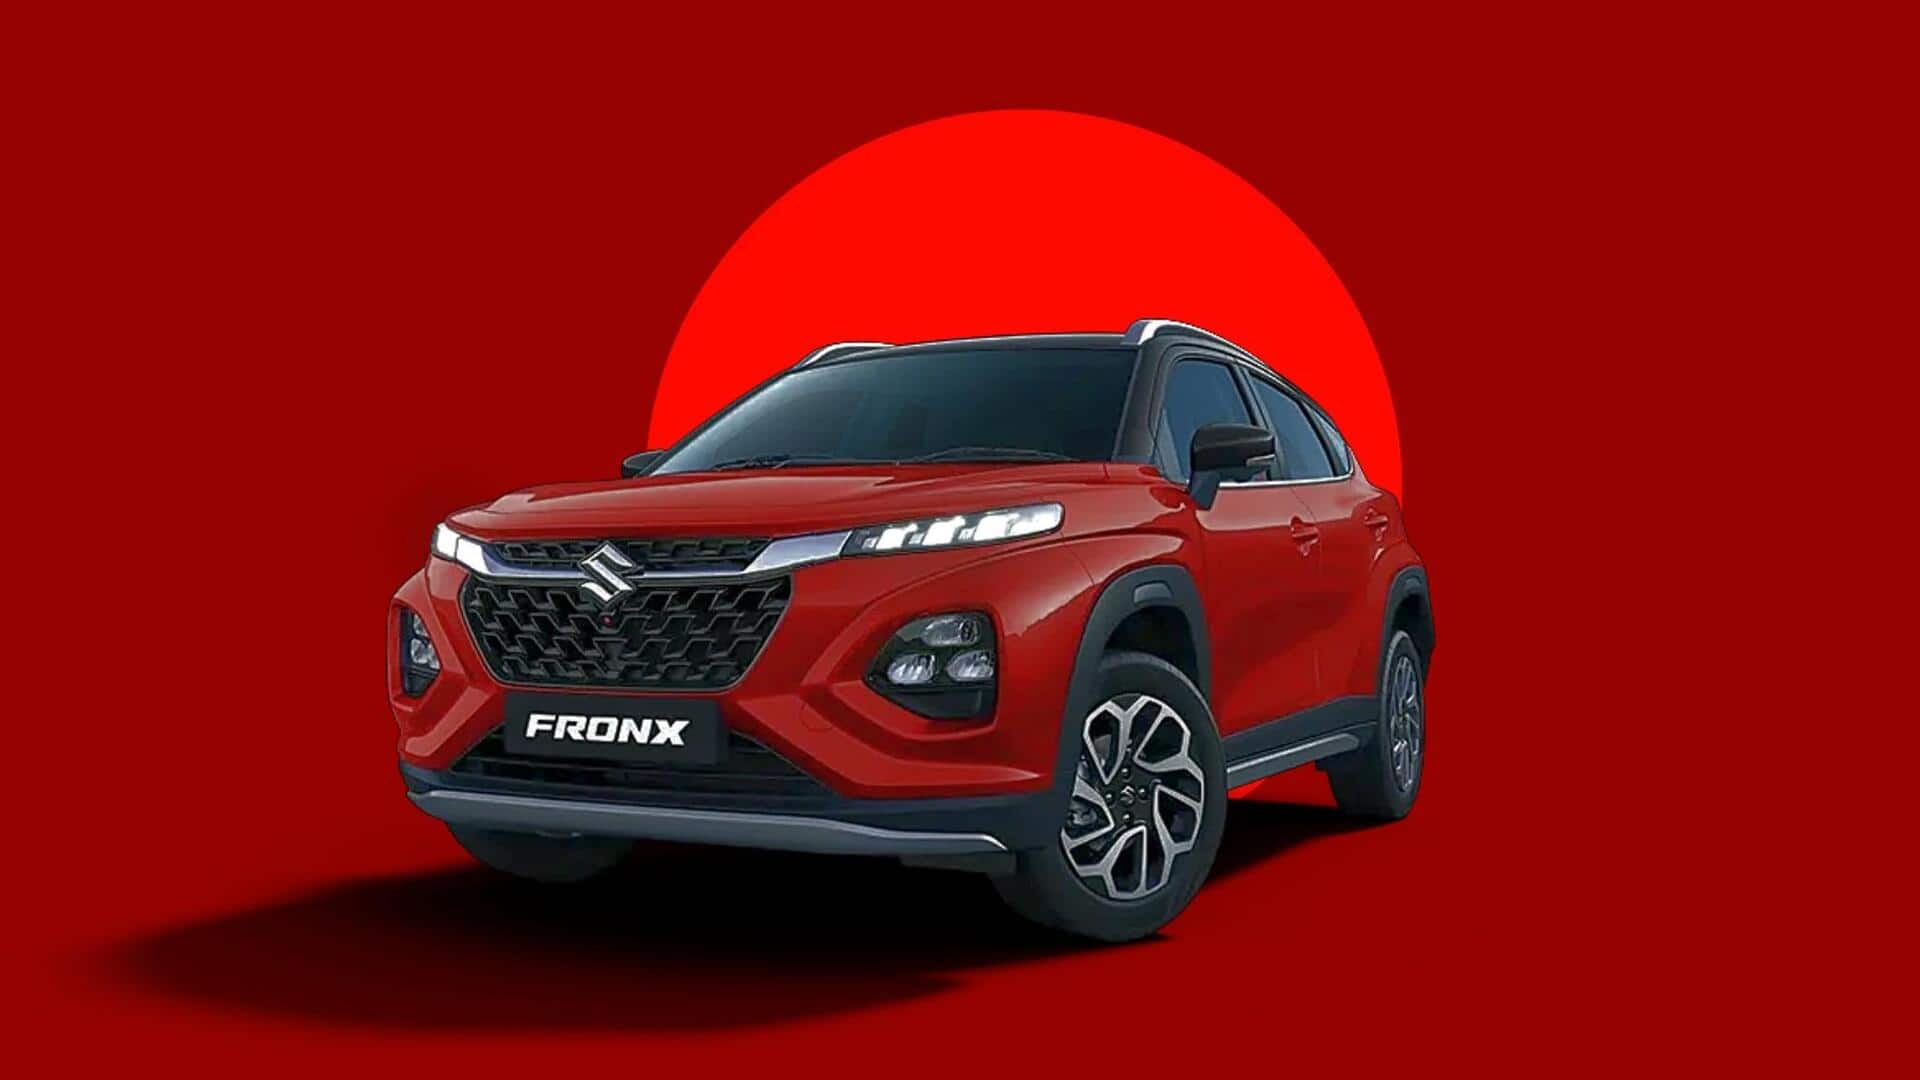 Attractive benefits on Maruti Suzuki Fronx this February: Check discounts